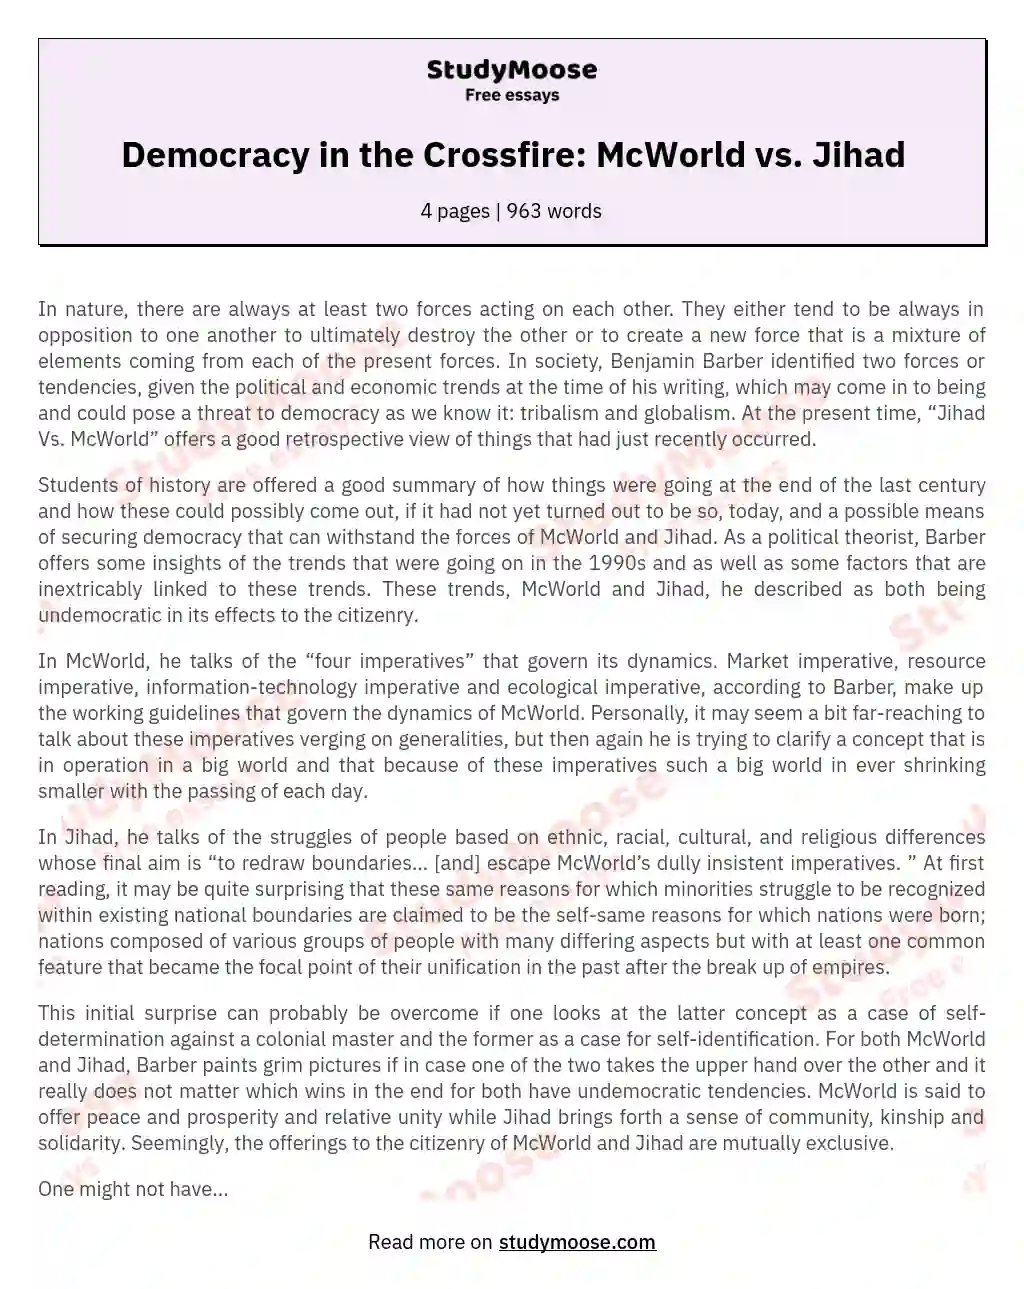 Democracy in the Crossfire: McWorld vs. Jihad essay